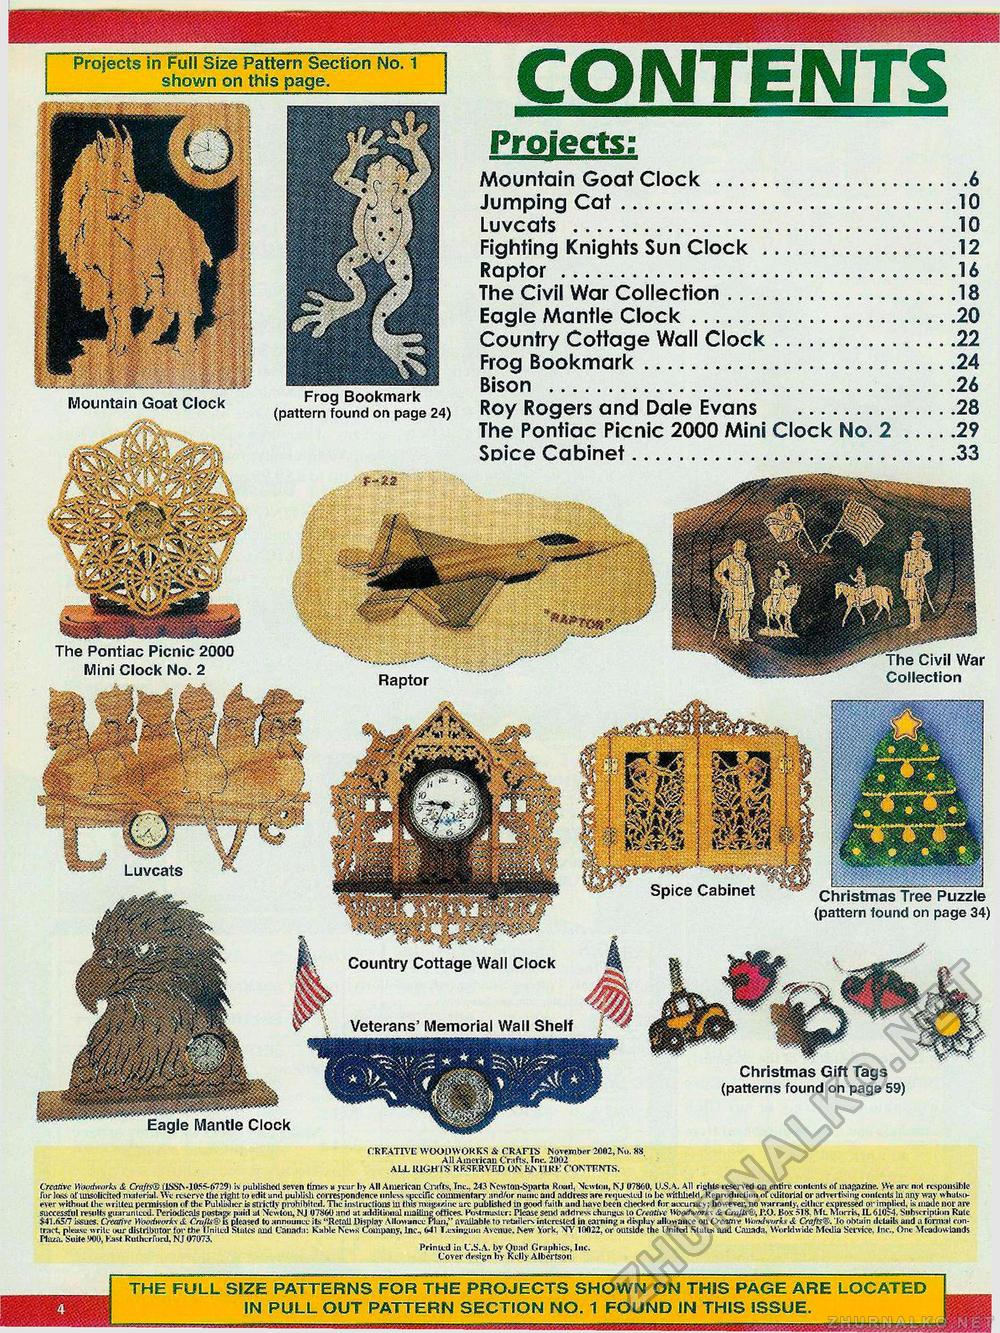 Creative Woodworks & crafts 2002-11,  4